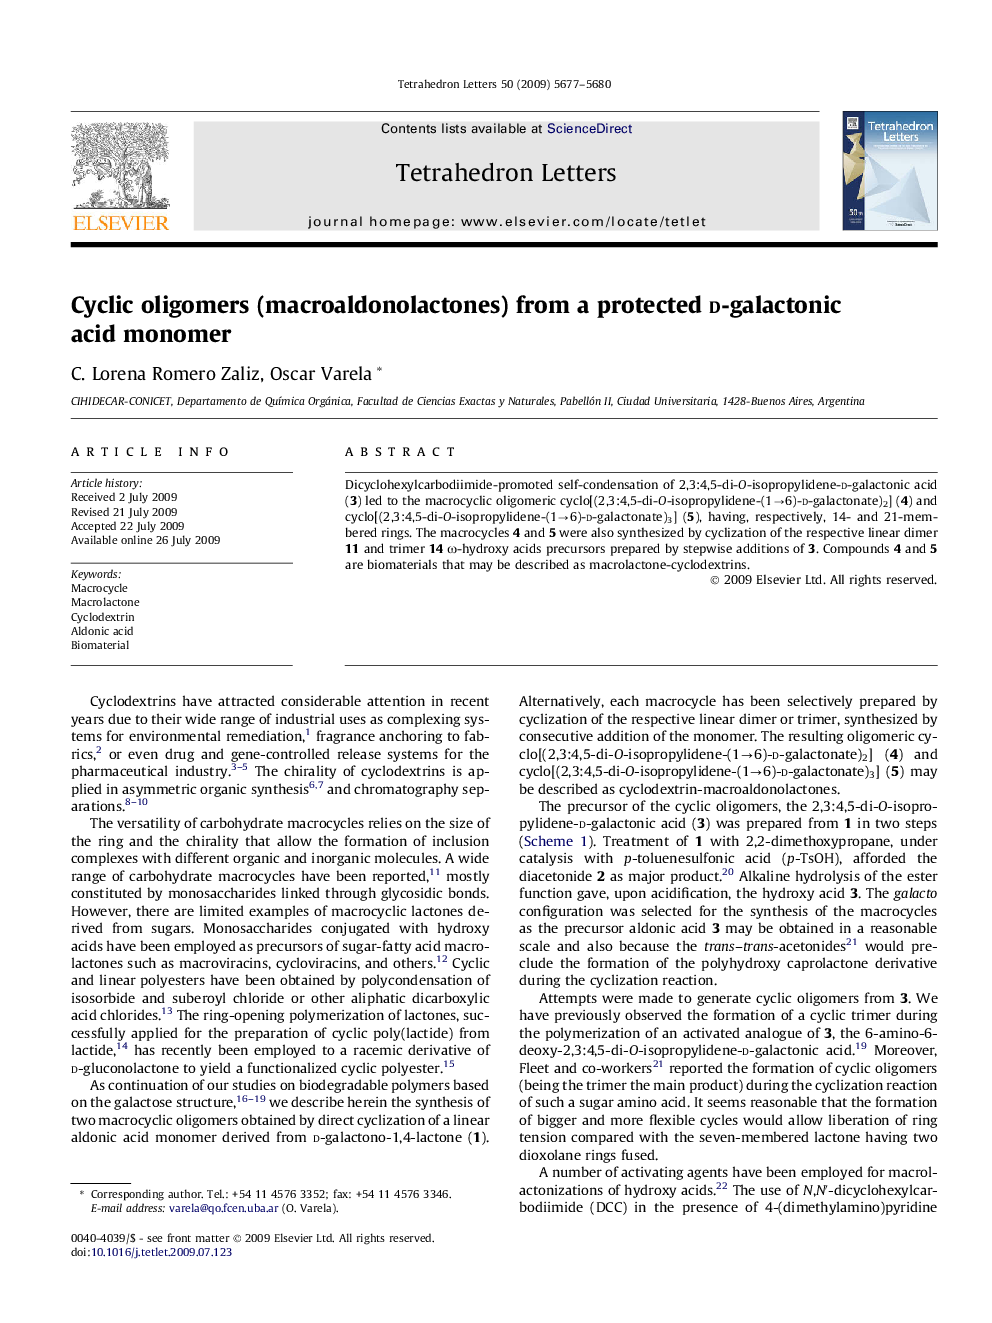 Cyclic oligomers (macroaldonolactones) from a protected d-galactonic acid monomer